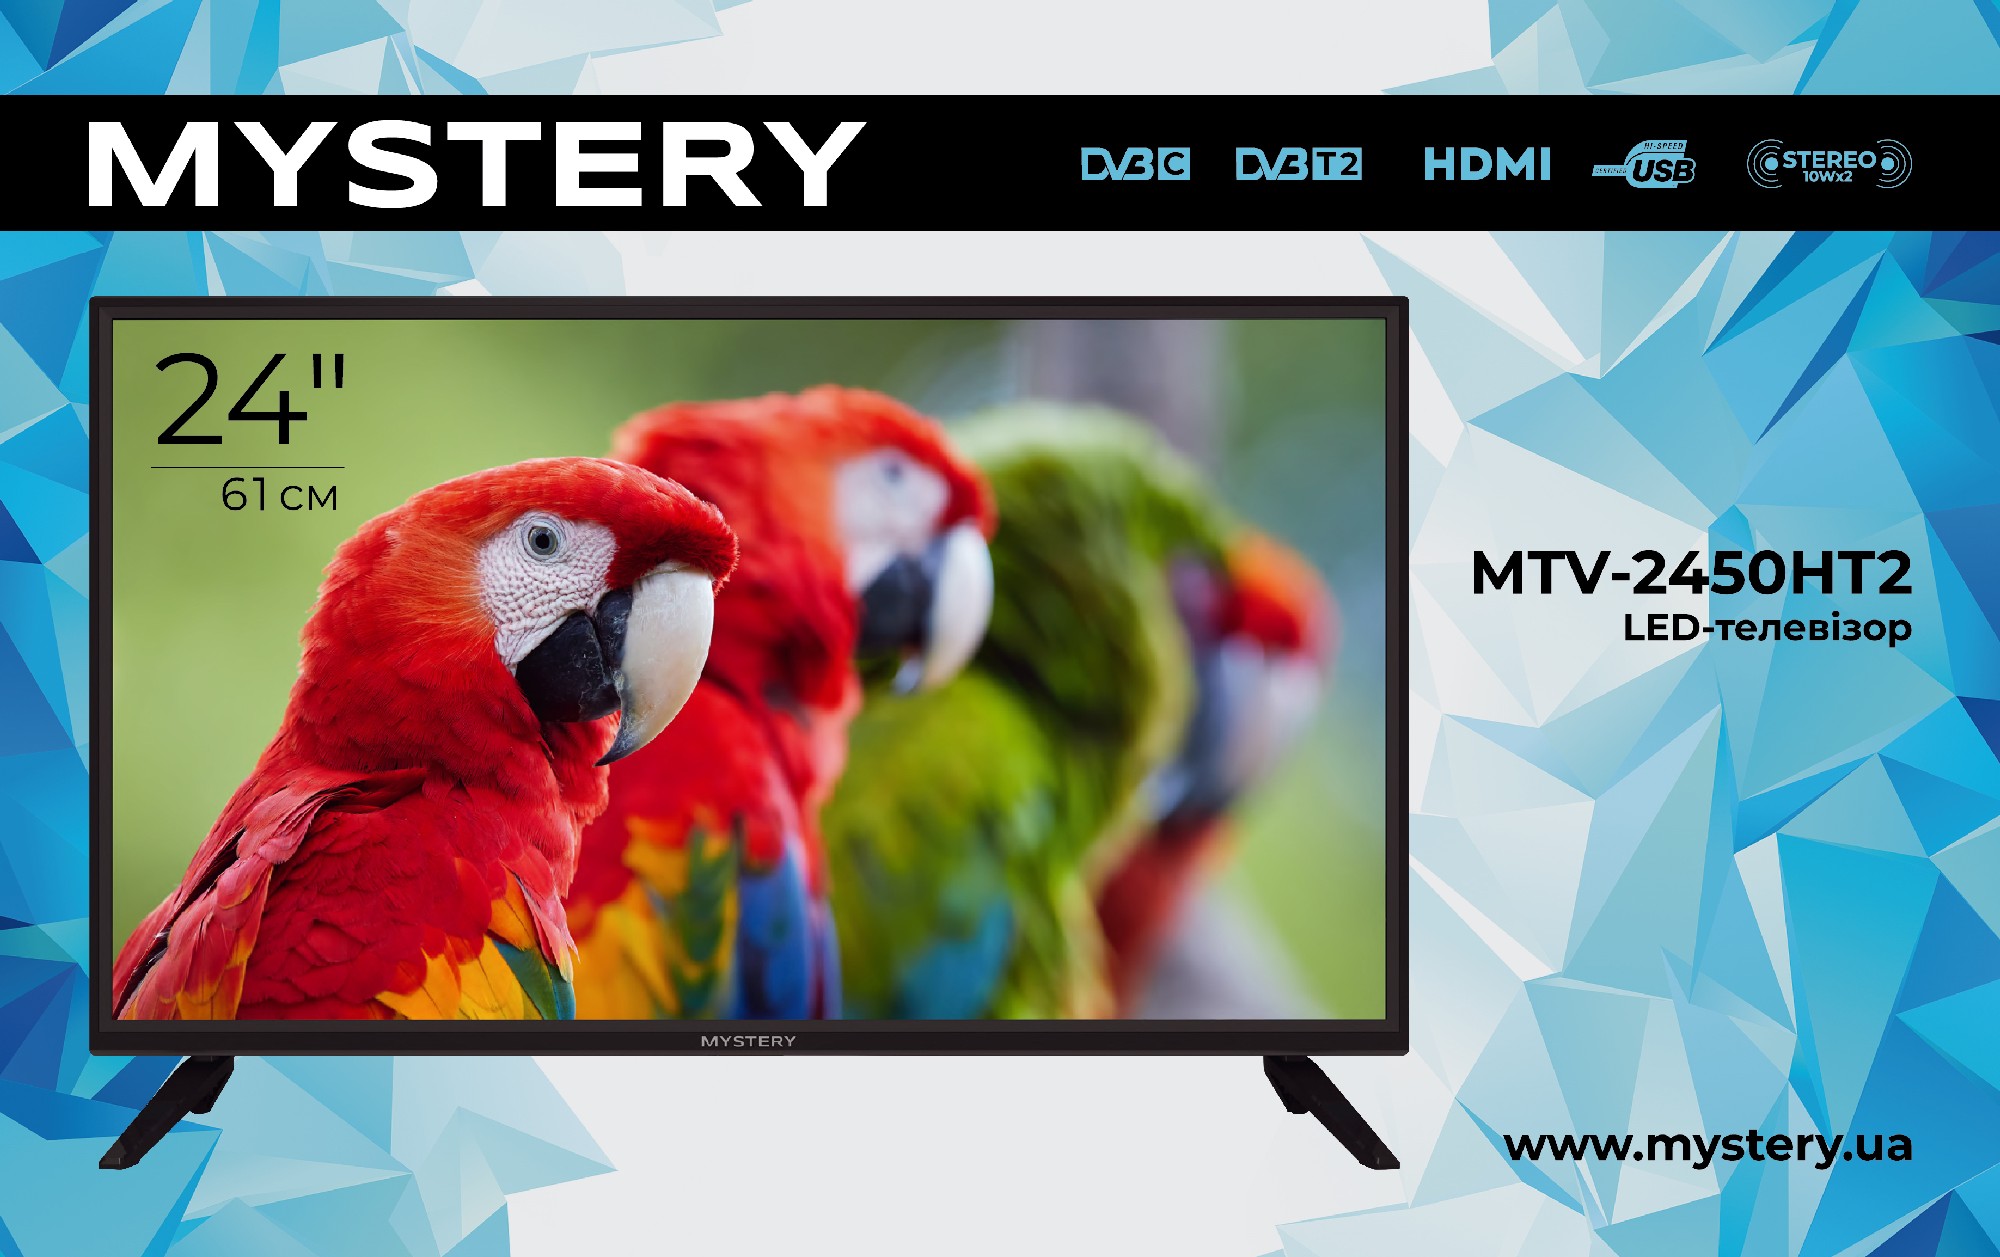 Mystery MTV-2450HT2 TV